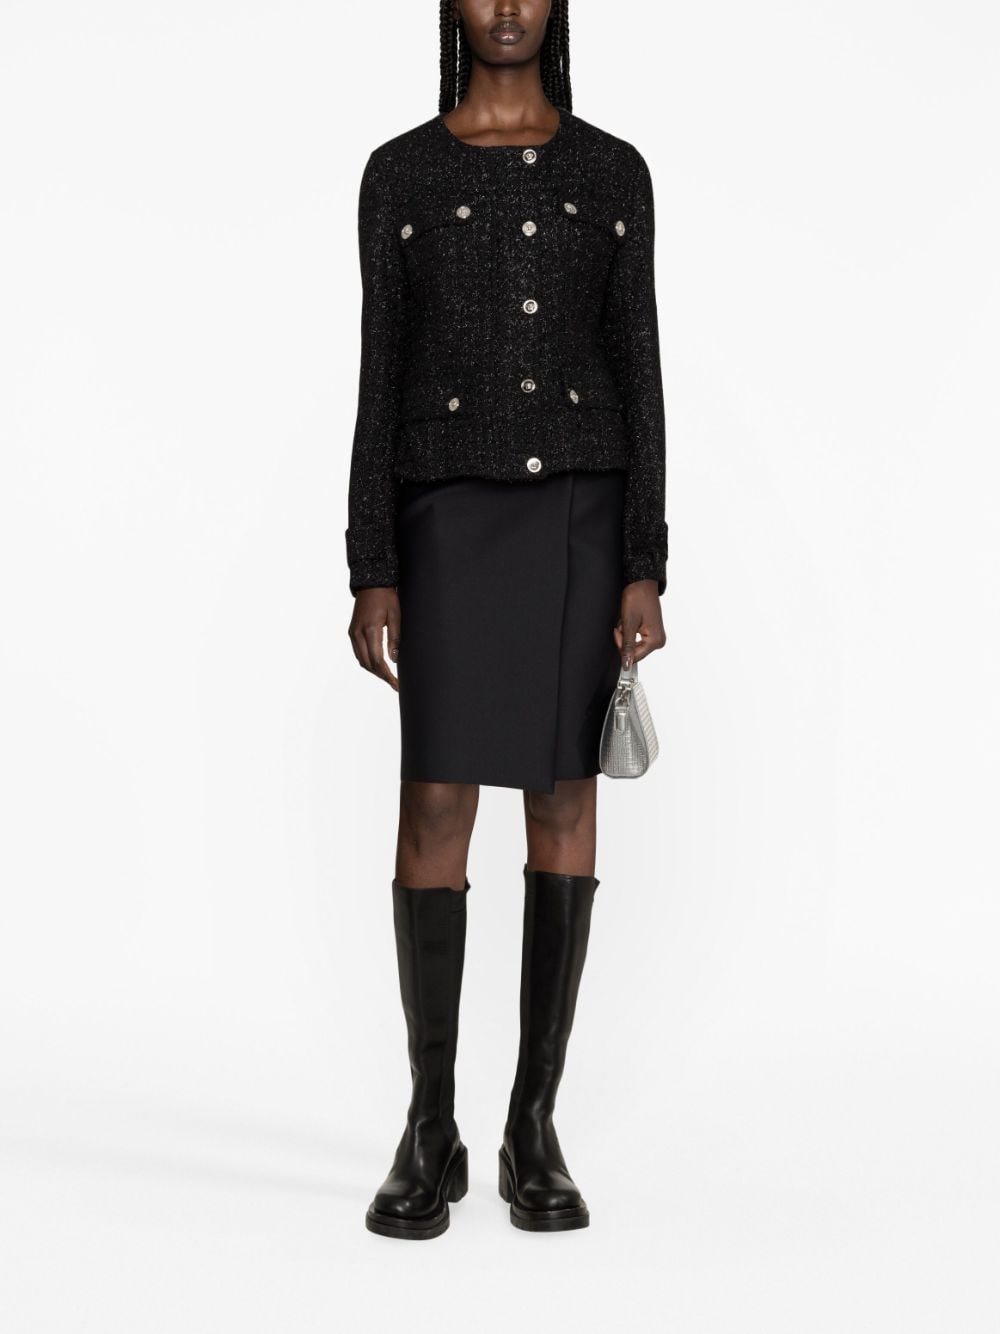 VERSACE Black Tweed Jacket for Women - FW23 Collection